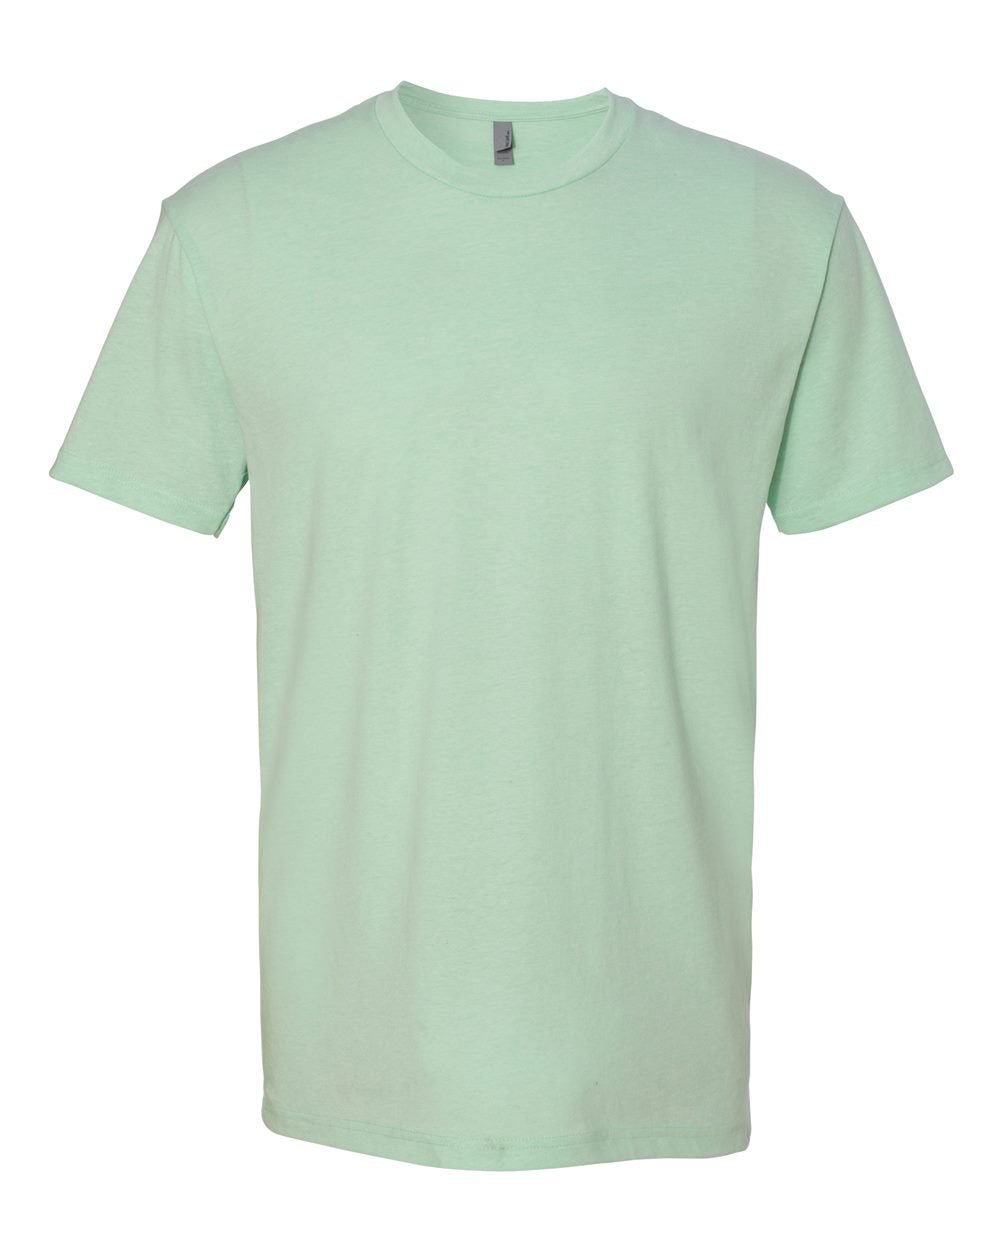 Unisex CVC T-Shirt - DSP On Demand